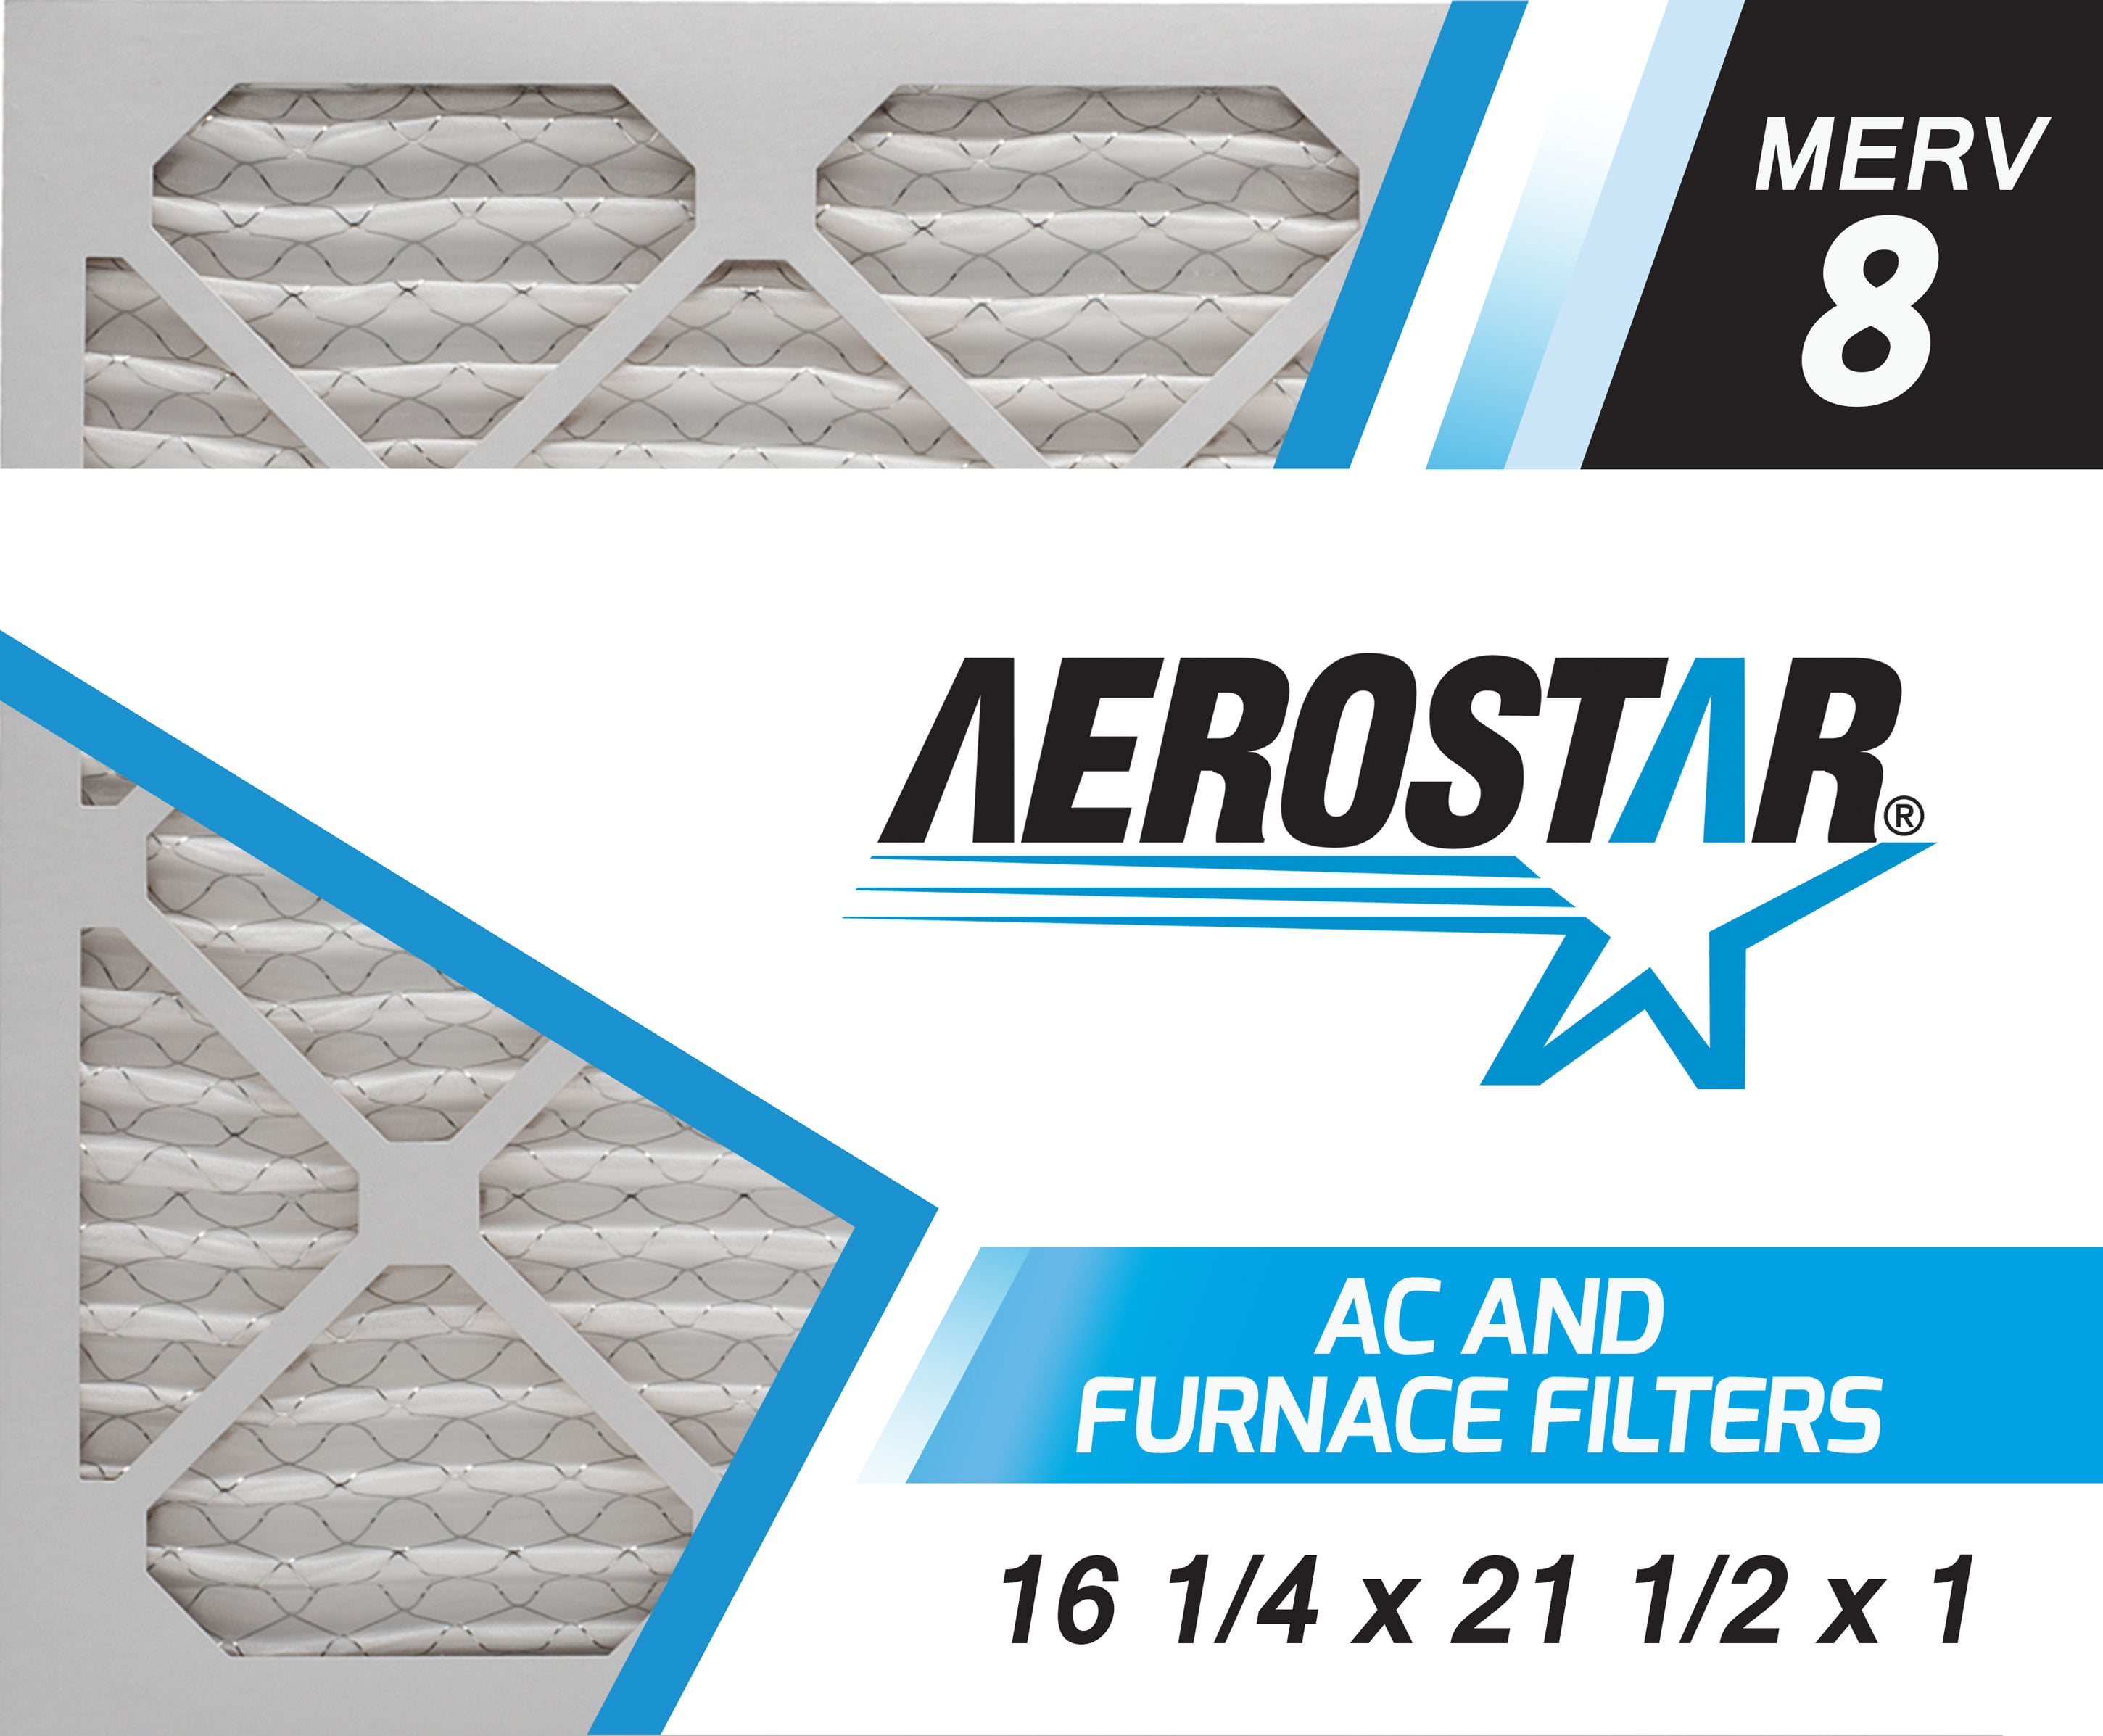 AC et four de filtre à air en Aerostar 2,5 cm lot de 6 Merv 8  16x20x1 MERV 8 